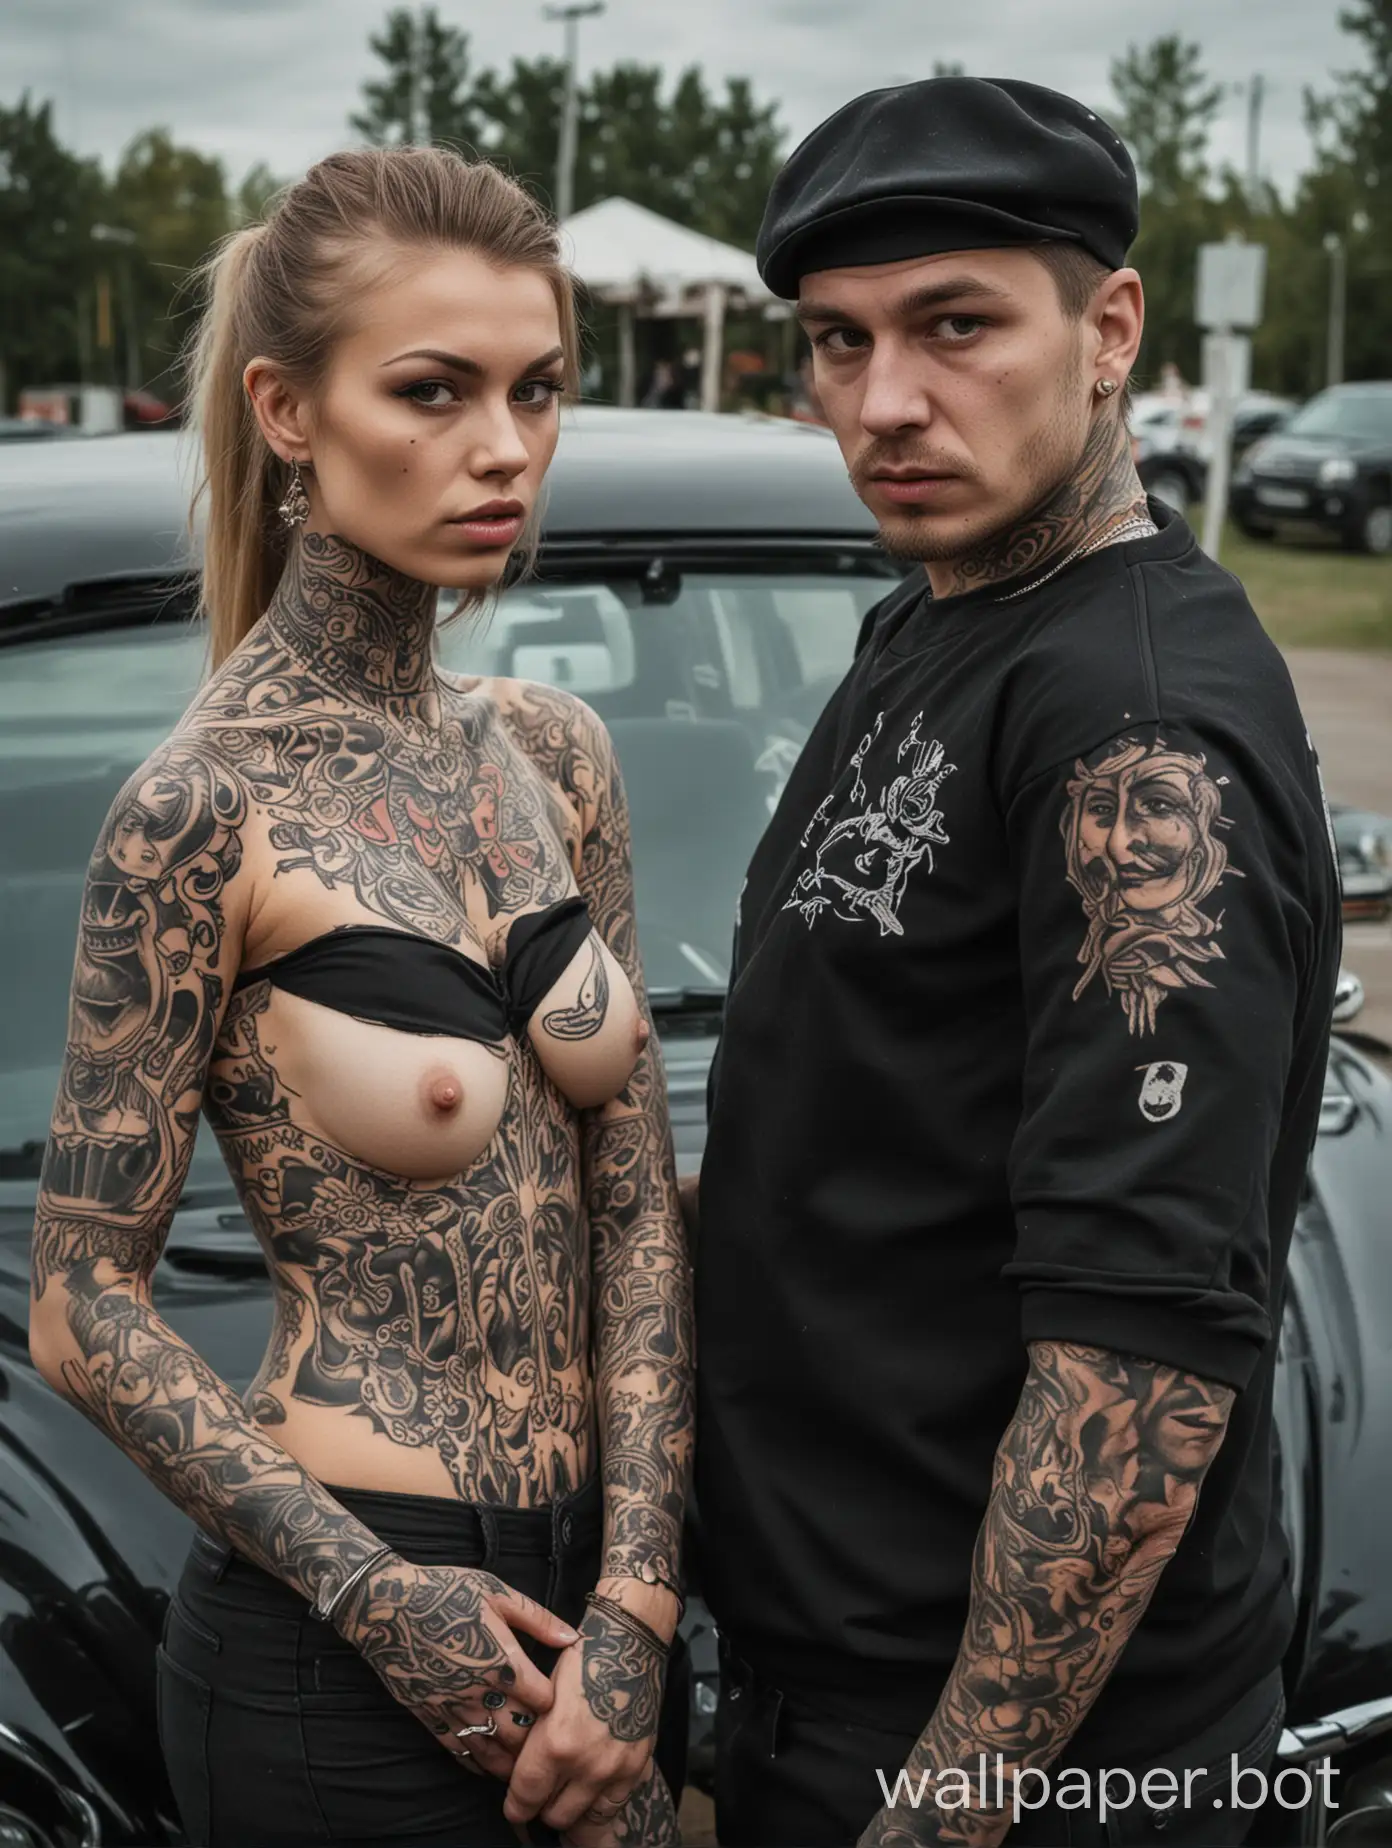 Russian mafia, man and woman, tattoo, Gelendvagen car